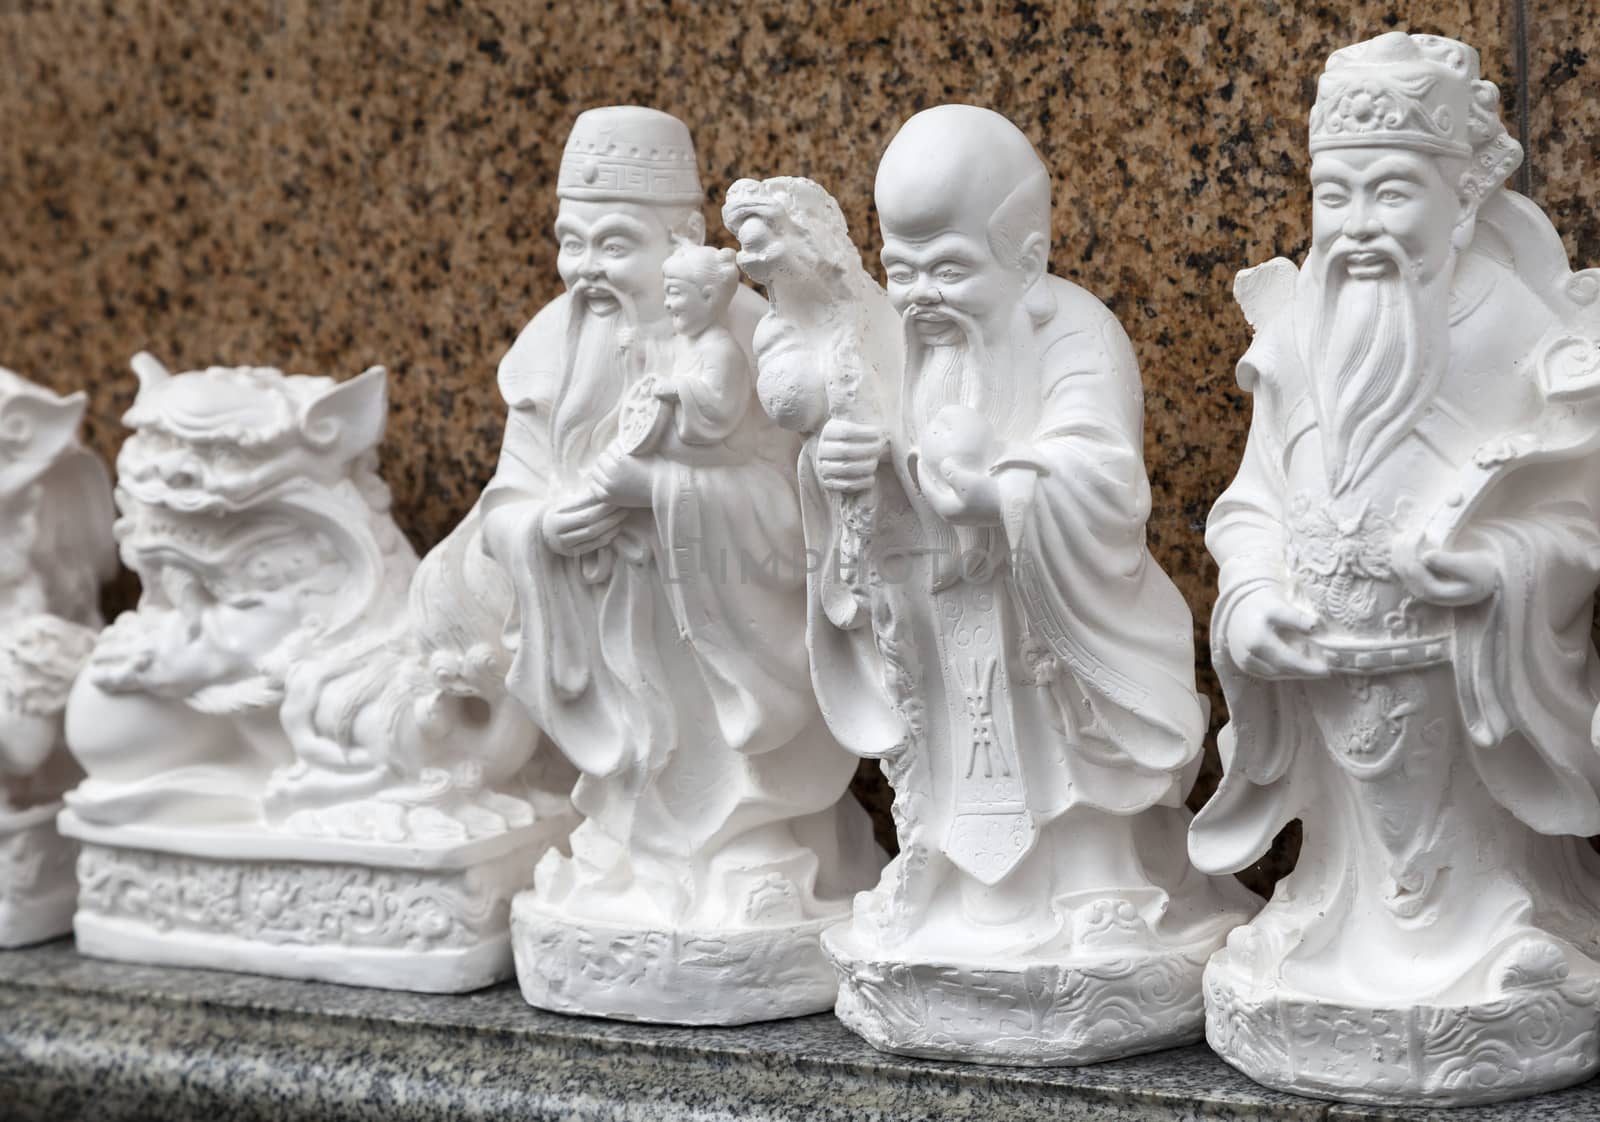 SAIGON, VIETNAM - JANUARY 04, 2015 - Plaster statuettes representing Buddhist deities